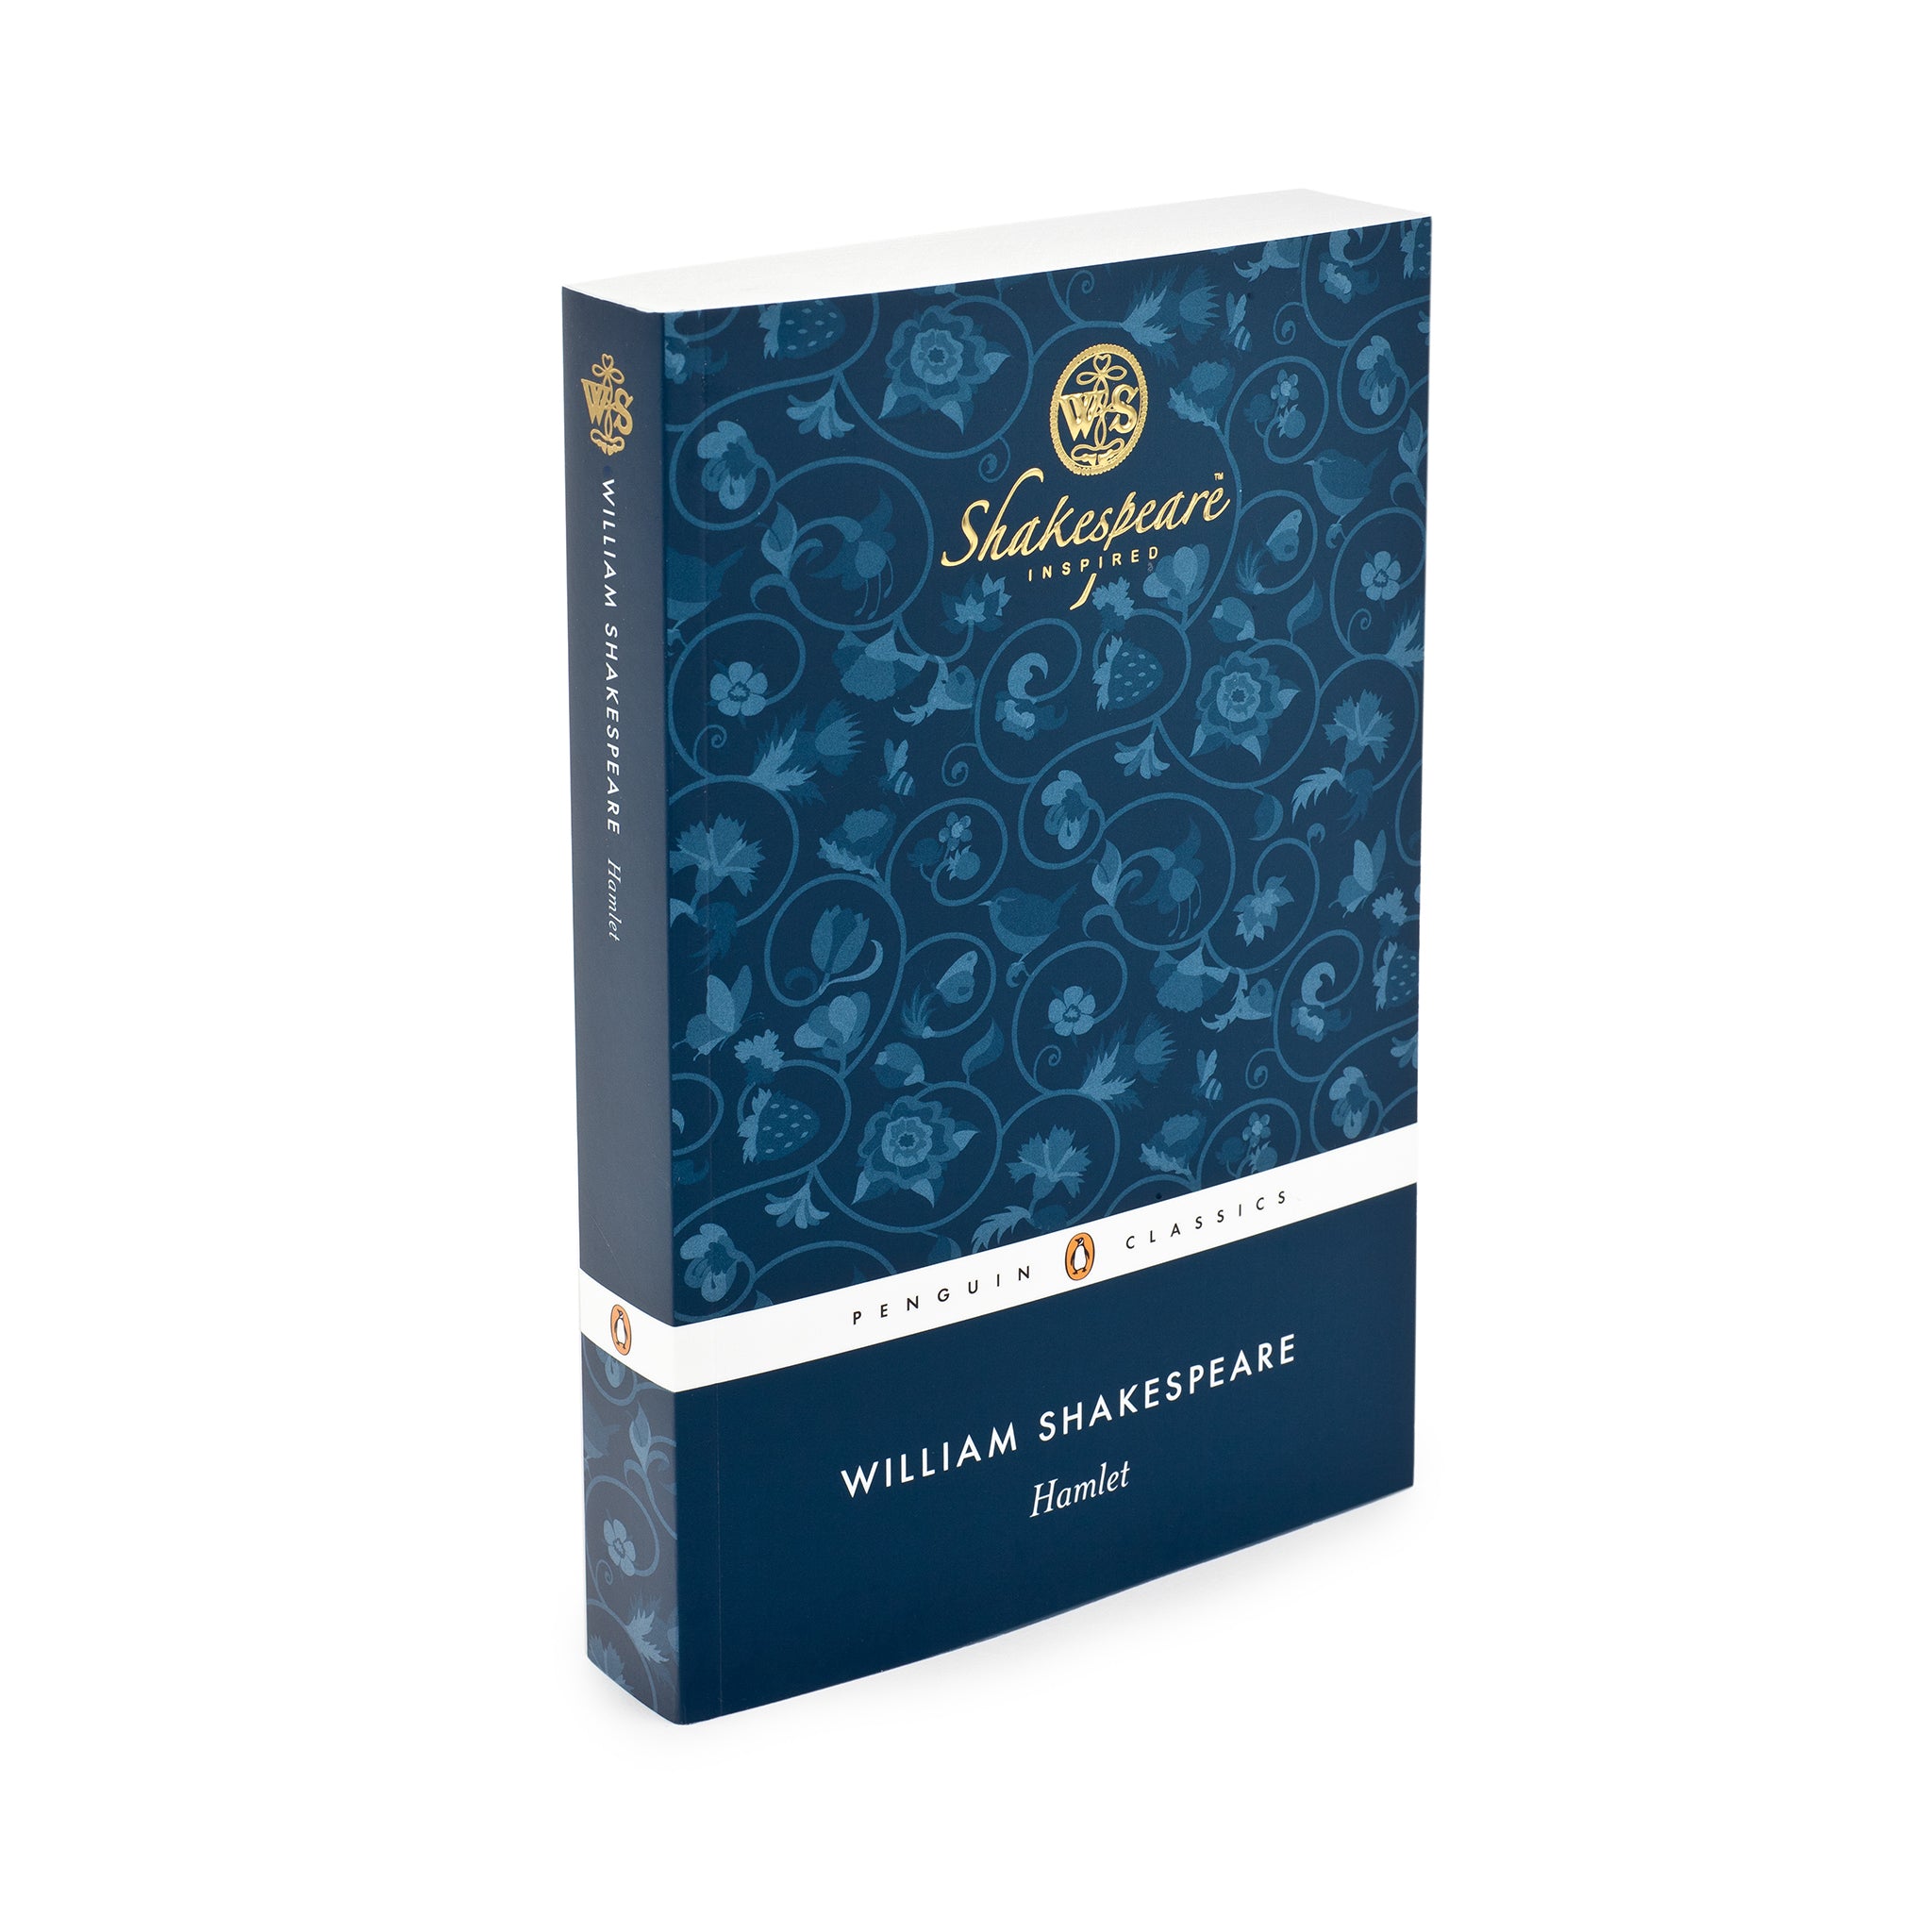 Penguin Classics Hamlet Shakespeare Inspired edition – Shakespeare